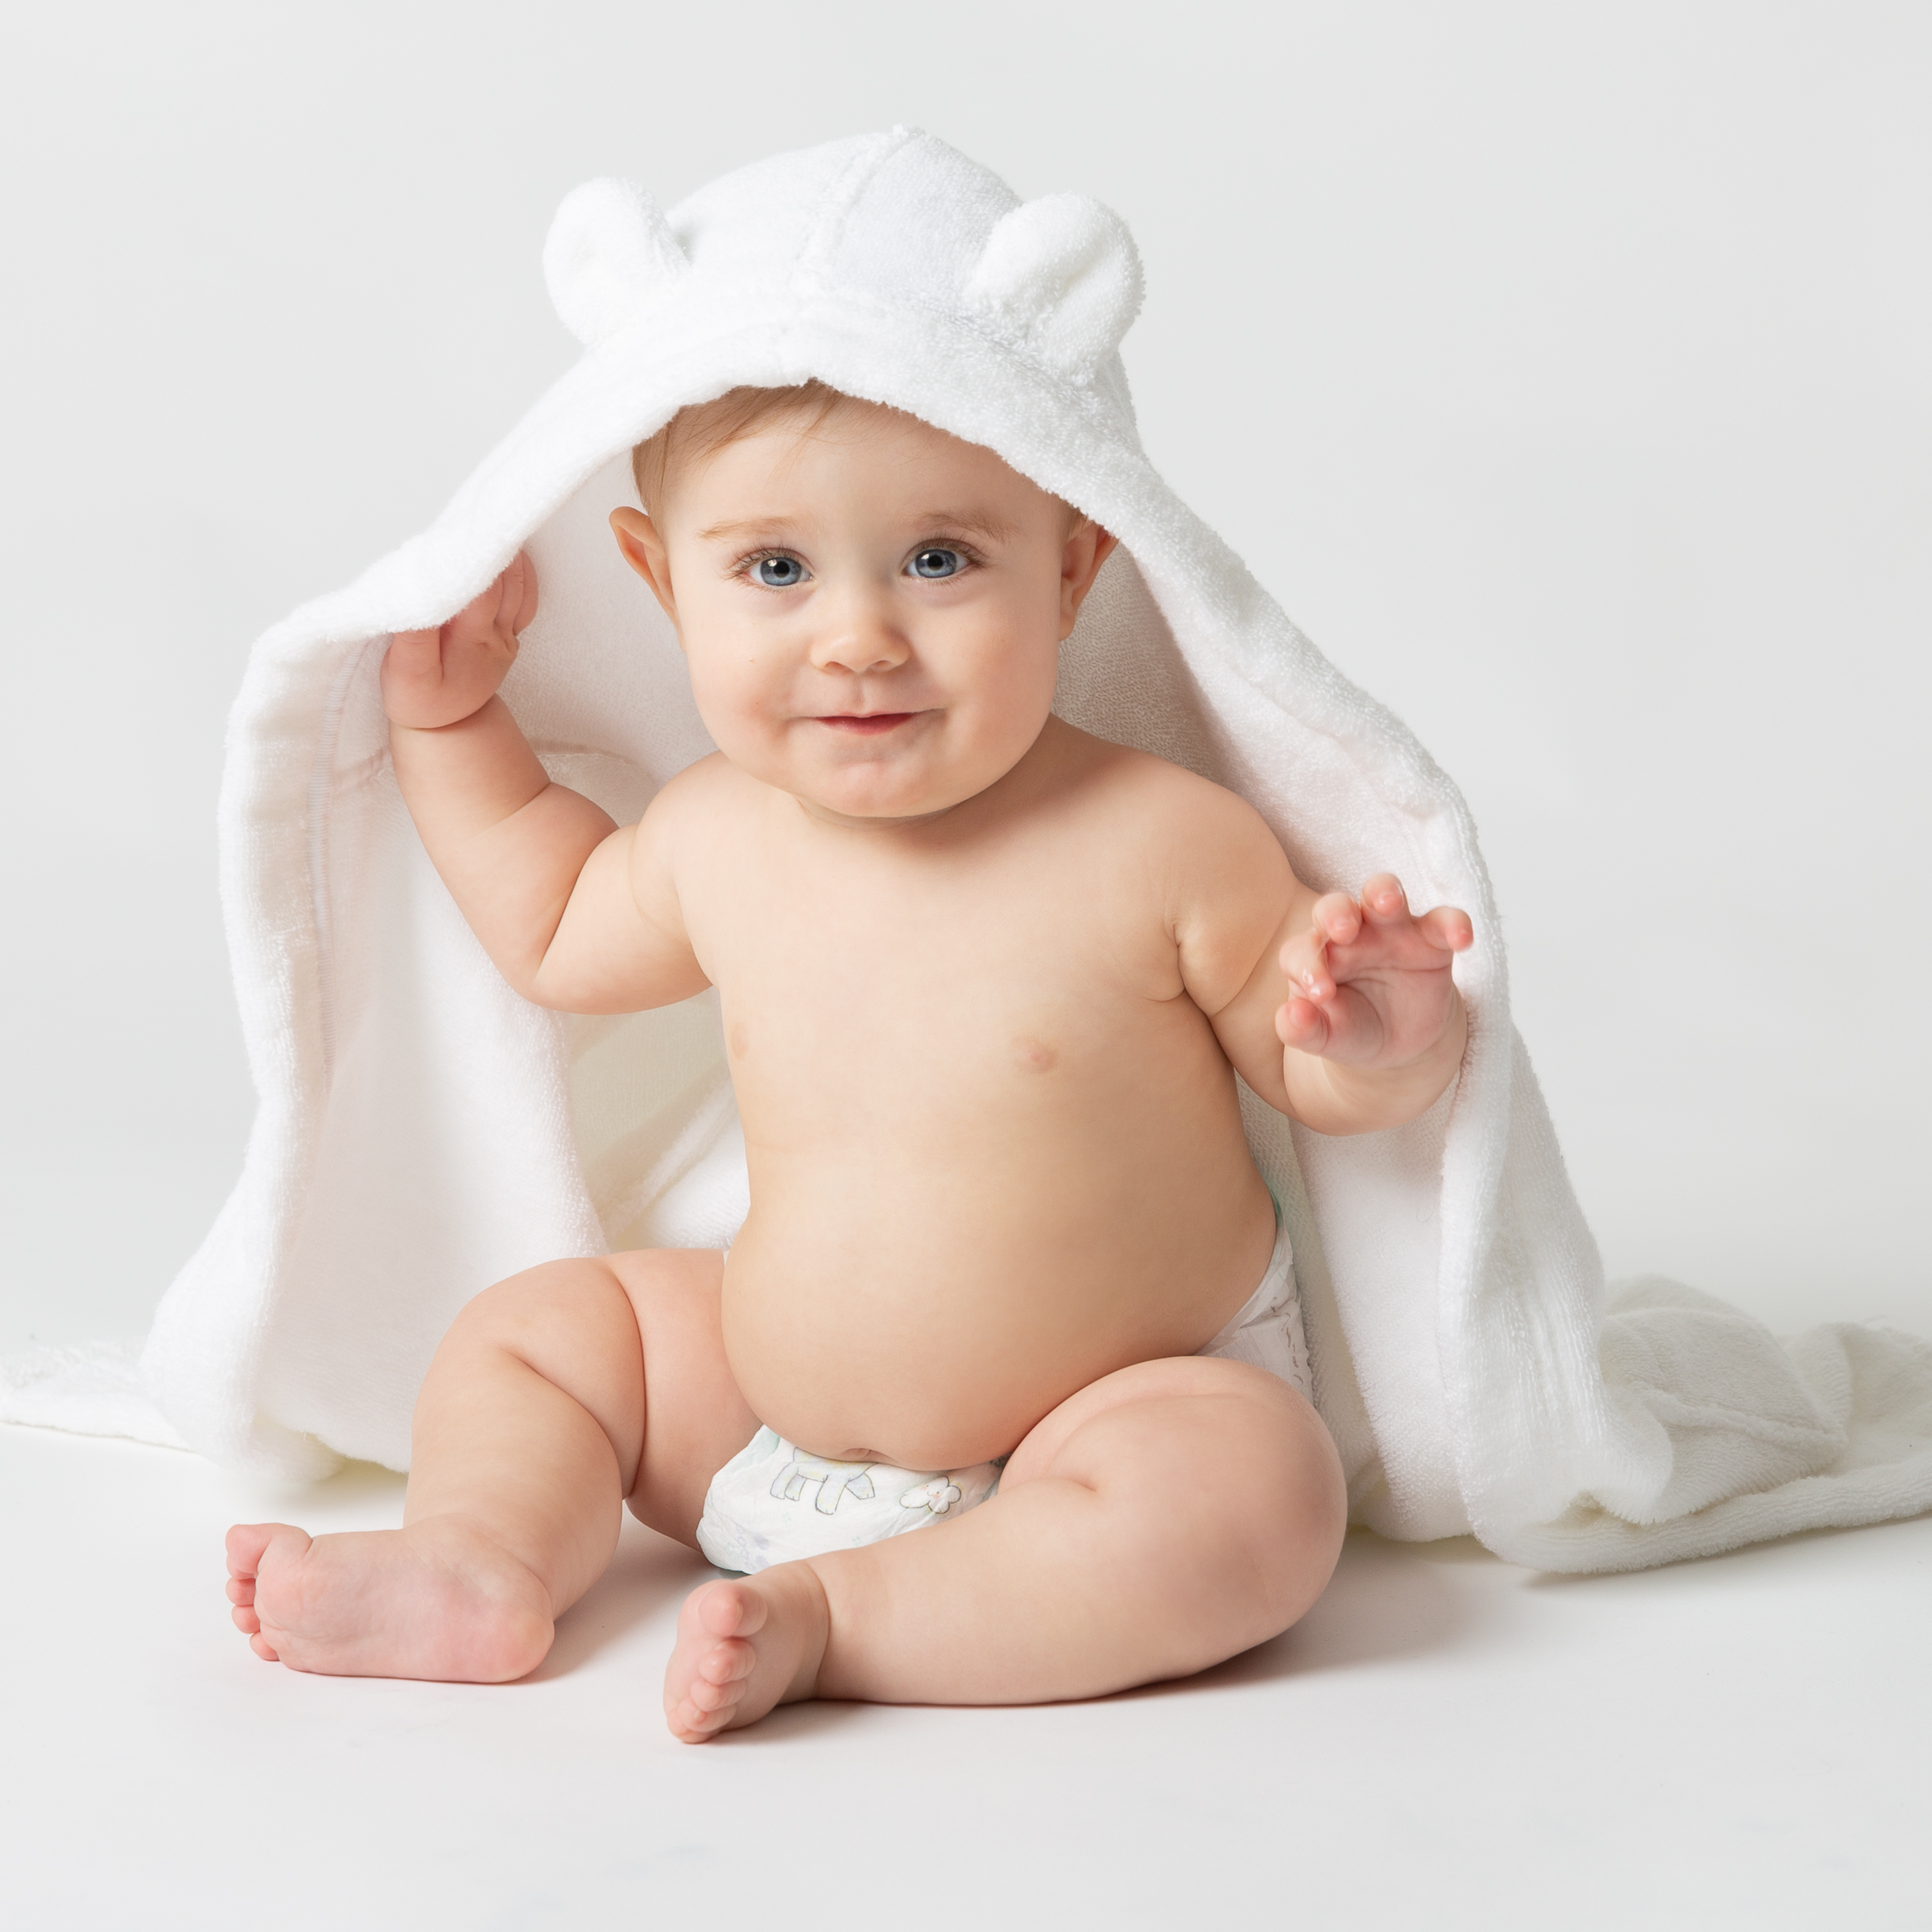 baby-hooded-towel-sitting-nappy-east-london.jpg